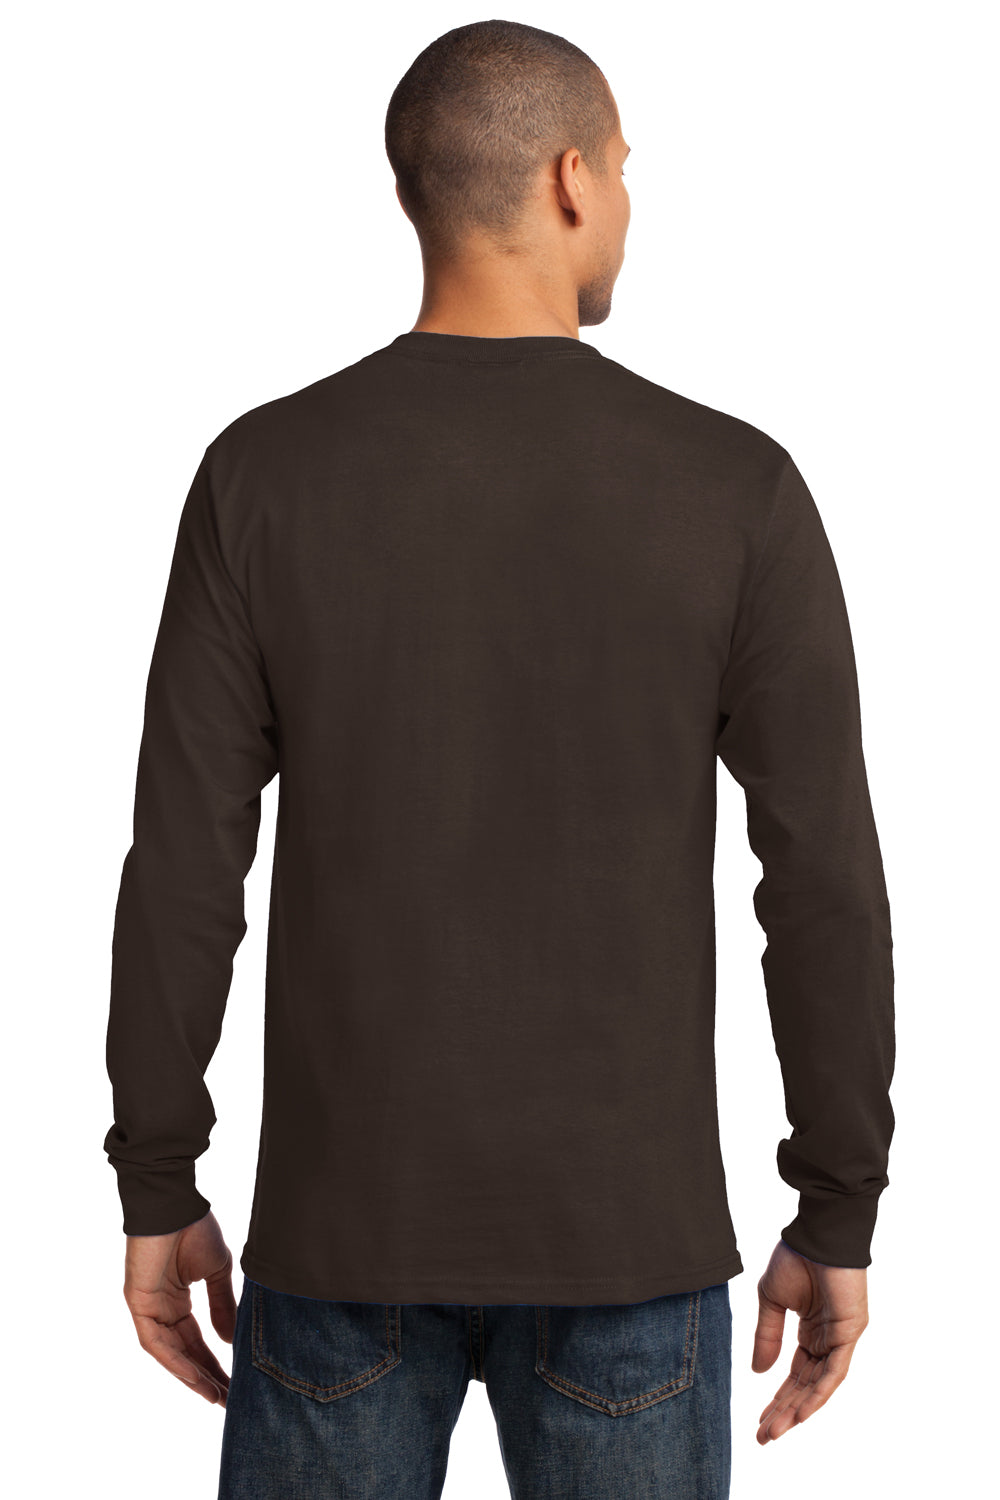 Port & Company PC61LS Mens Essential Long Sleeve Crewneck T-Shirt Chocolate Brown Back